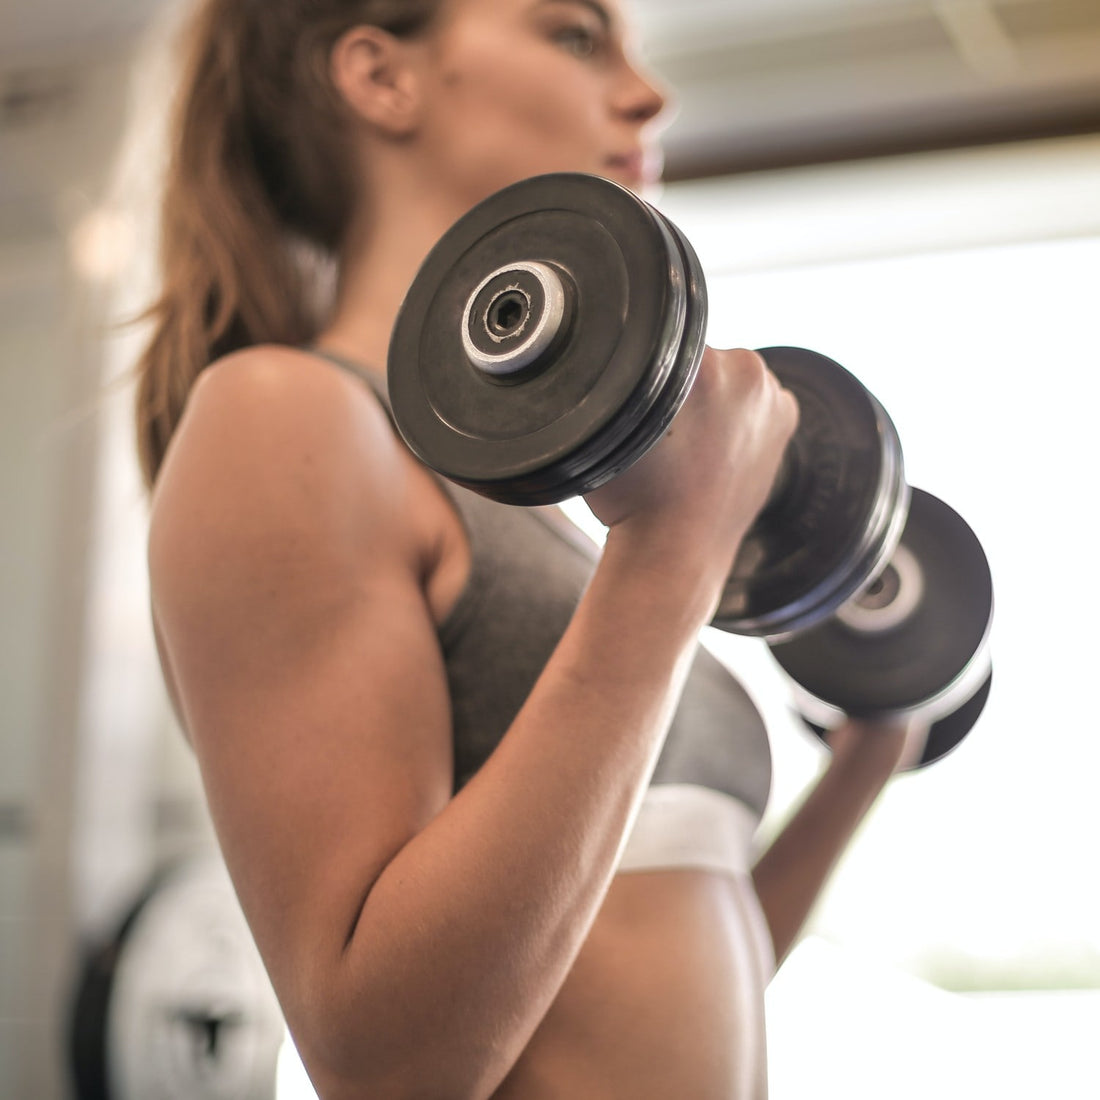 does lifting heavier weights make you bigger